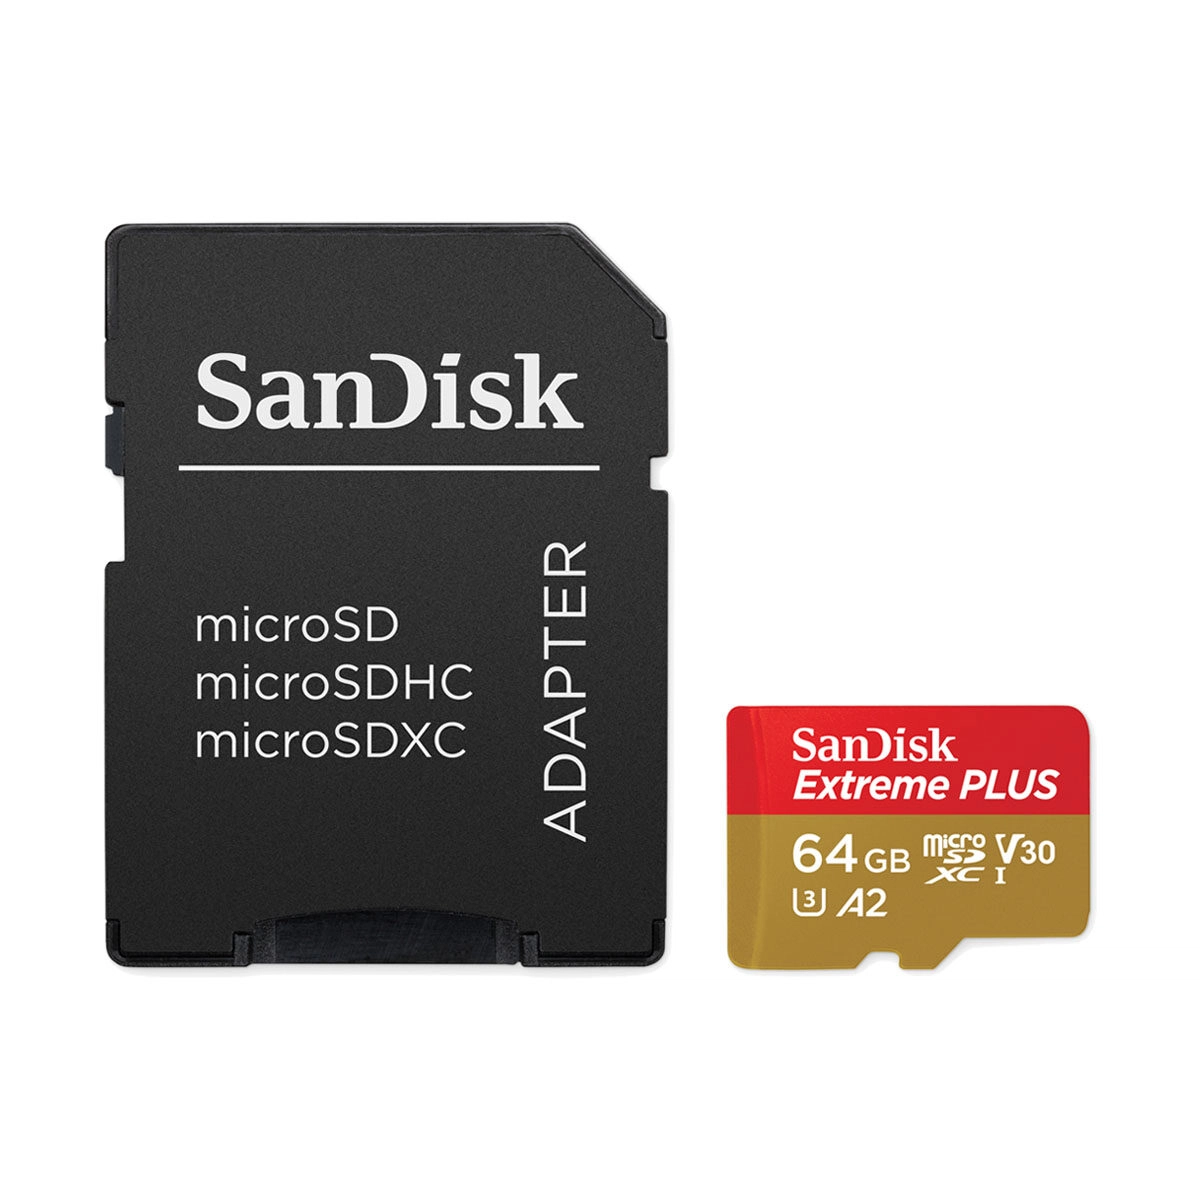 SanDisk Extreme PLUS microSD UHS-I Card